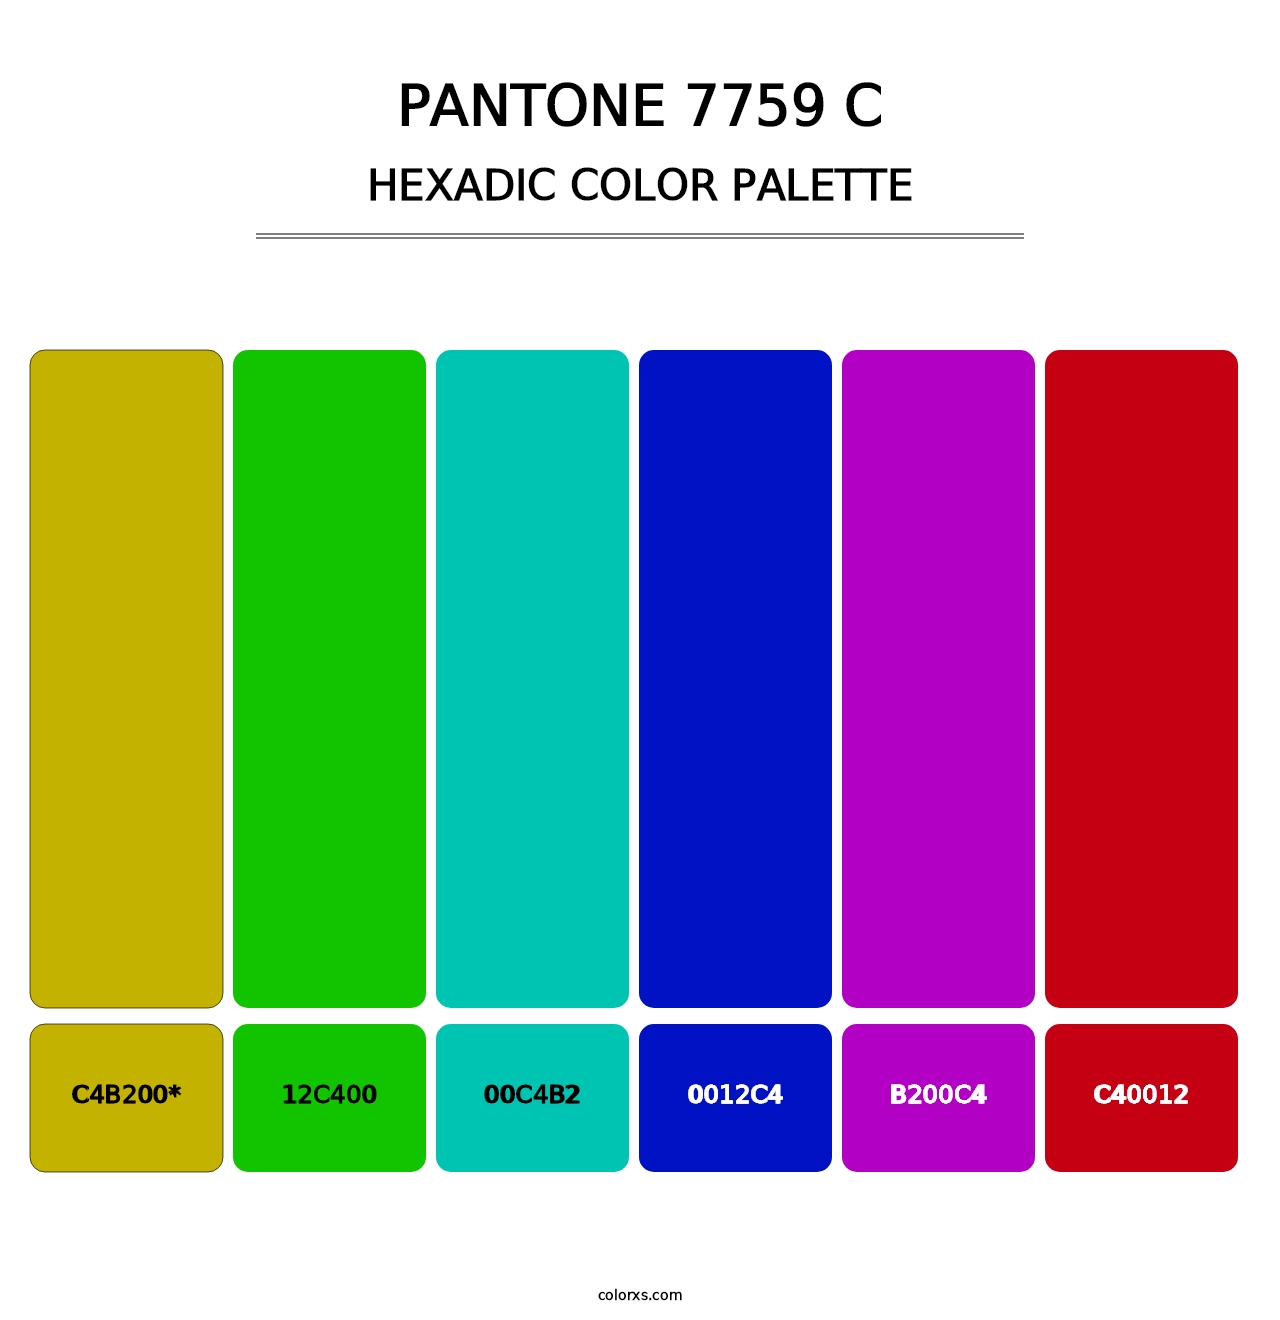 PANTONE 7759 C - Hexadic Color Palette